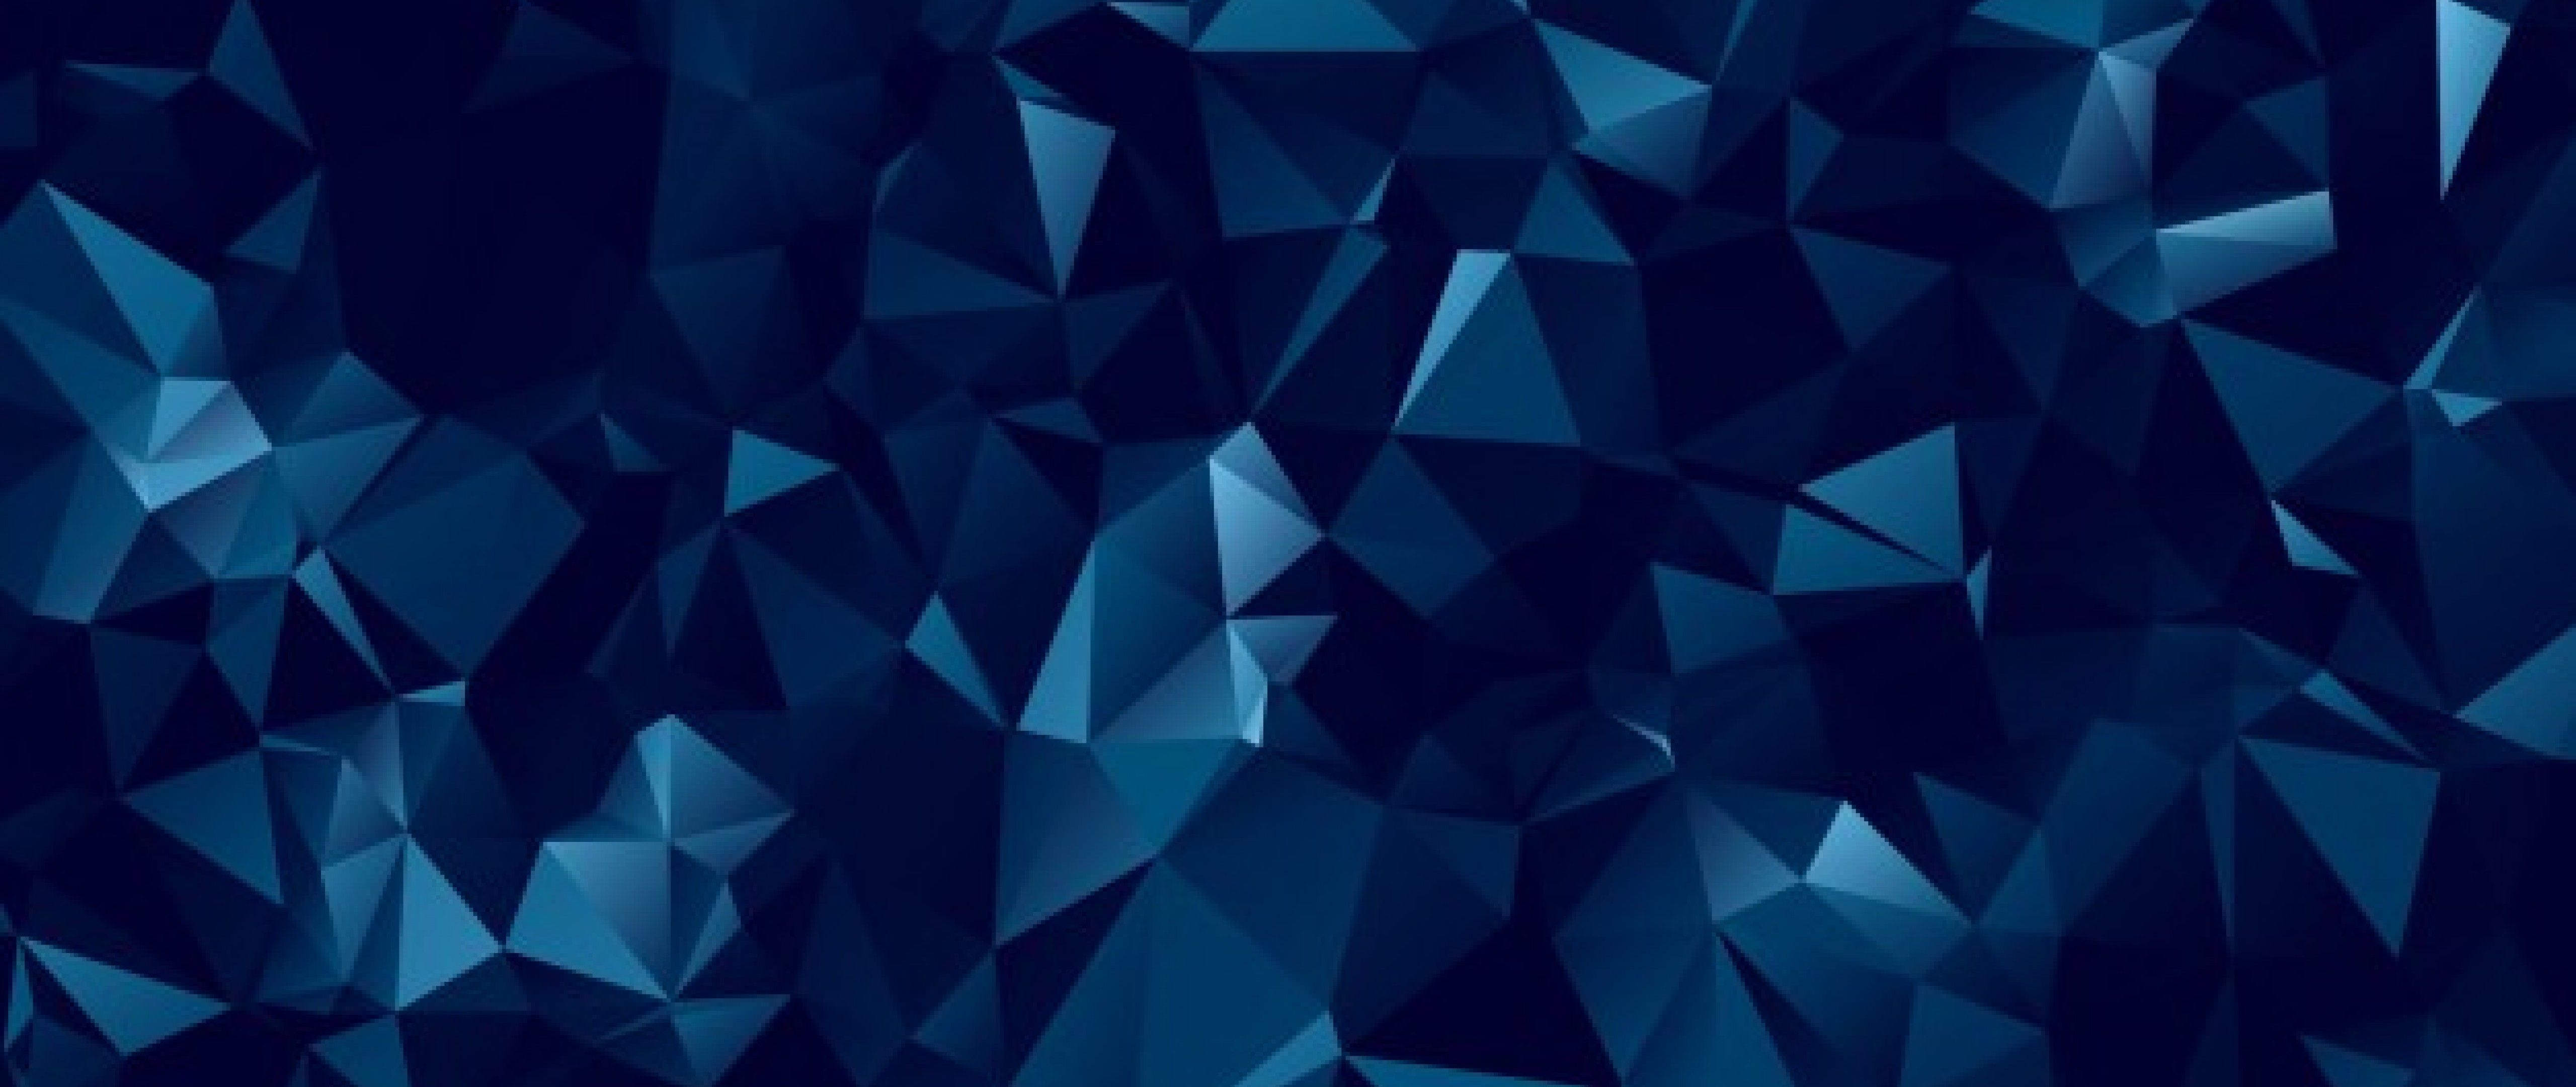 Windows 1.0 Wallpaper 4K Blue